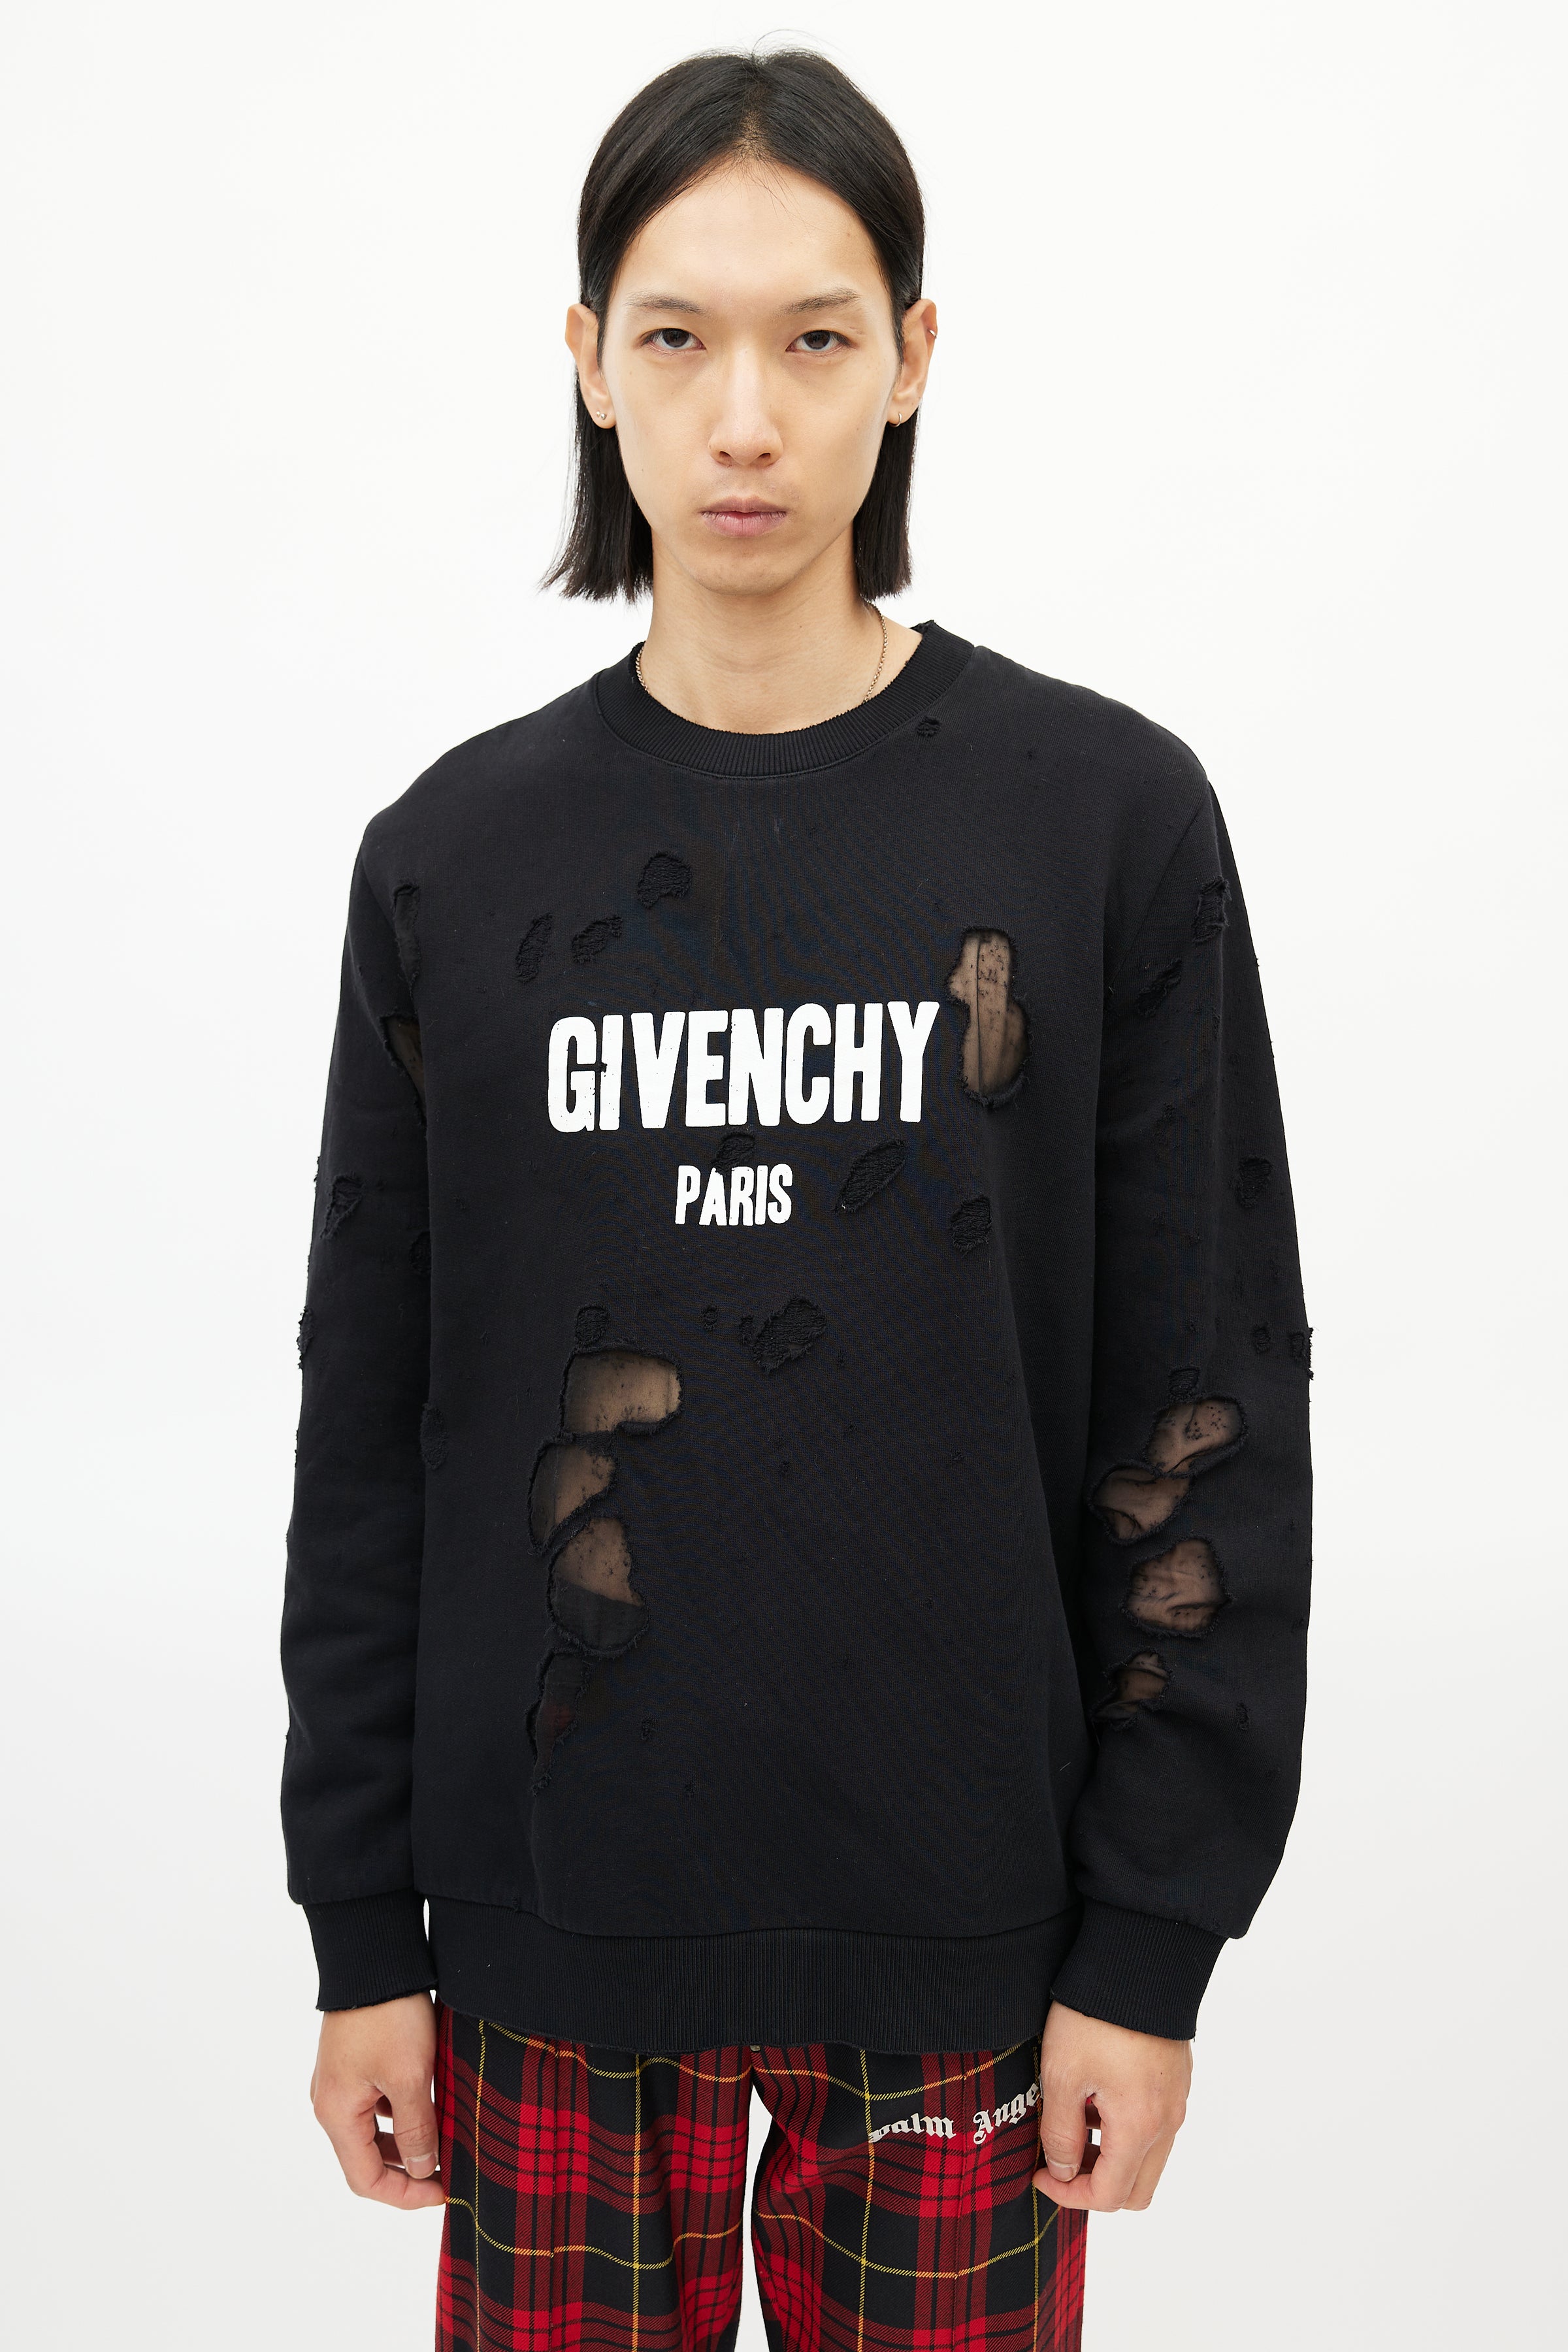 Givenchy Paris black hoodie woman girl cotton EXCELLENT condition